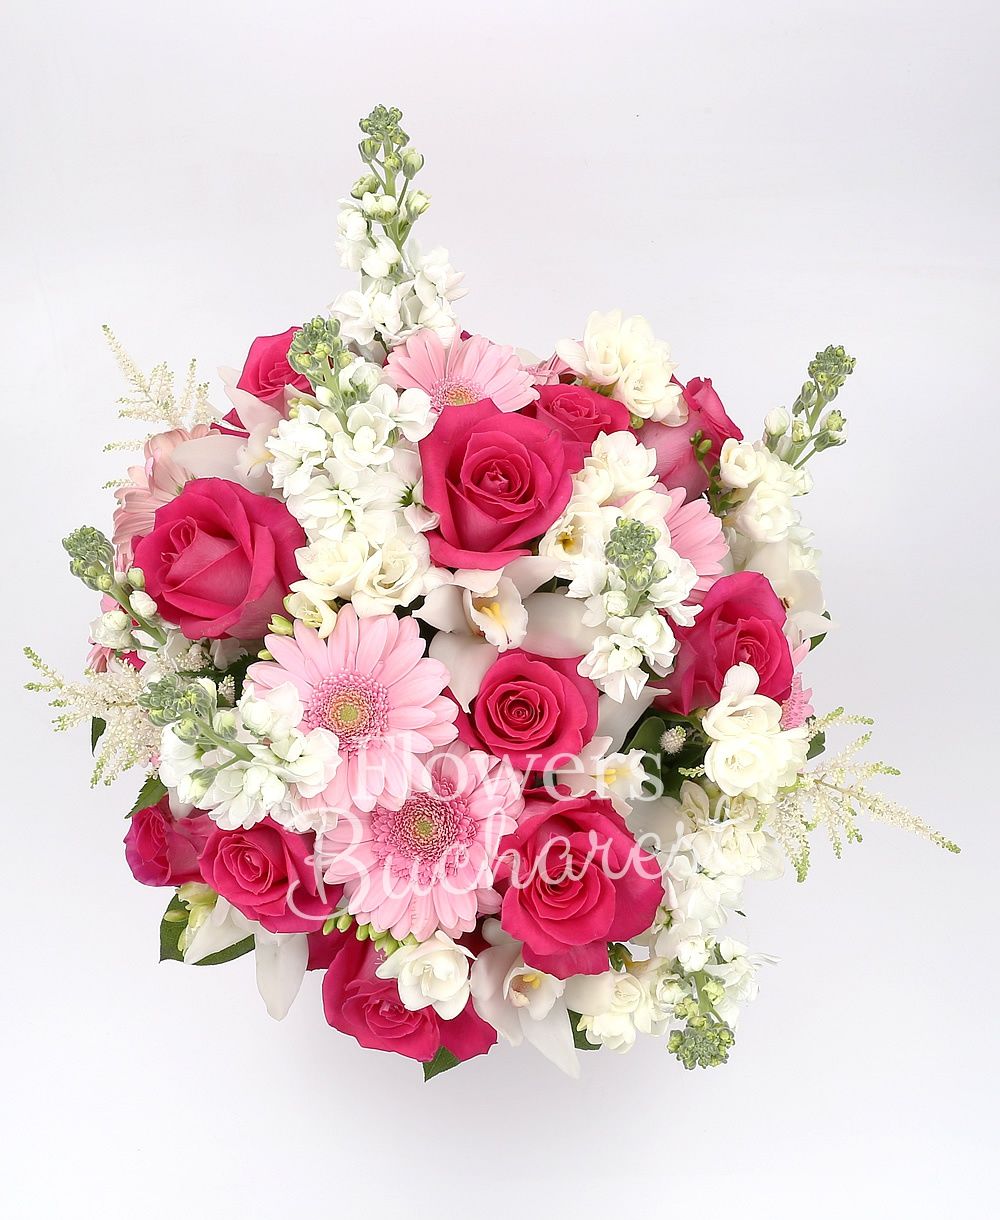 15 cyclam roses, 9 pink gerbera, 7 white matthiola, 20 white freesias, 5 white astilbe, white cymbidium, greenery